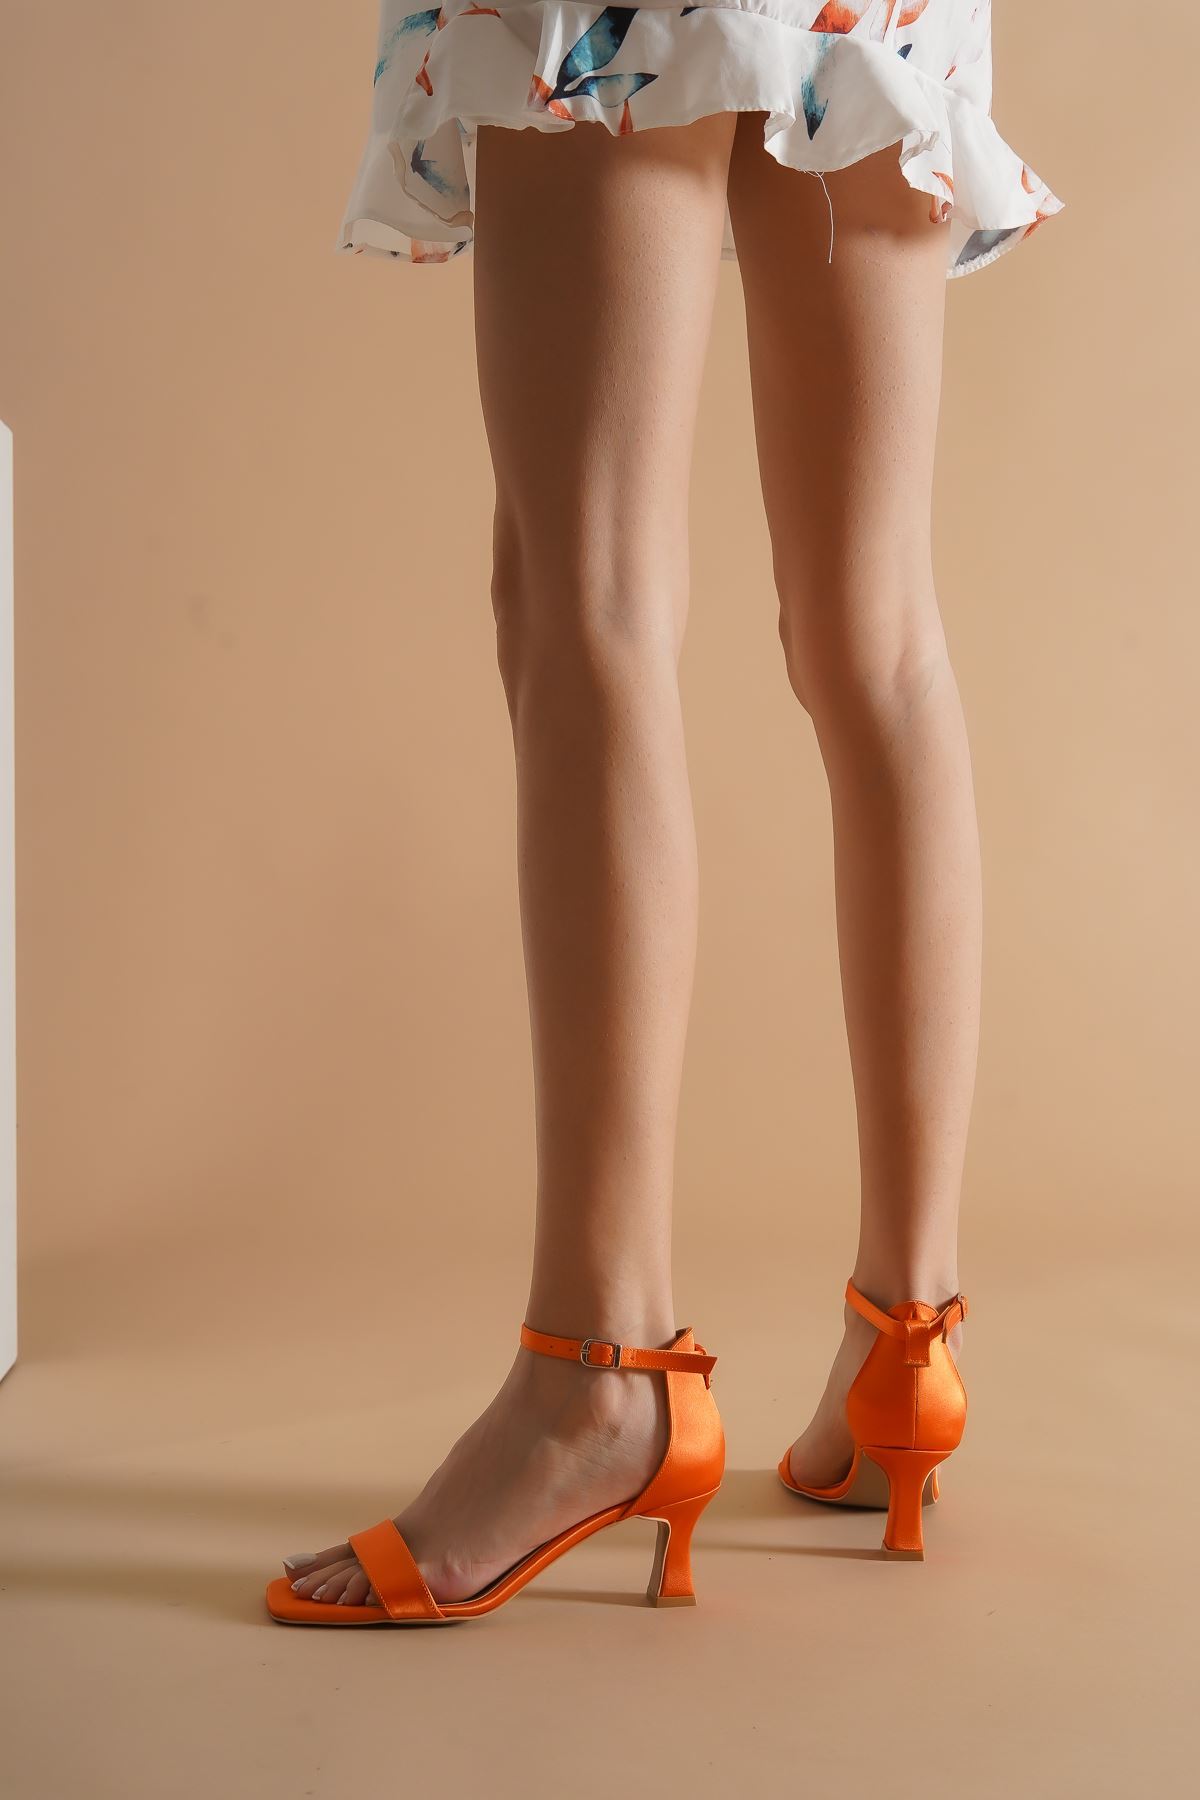 Quinn Turuncu Saten  Topuklu Kadın Ayakkabı